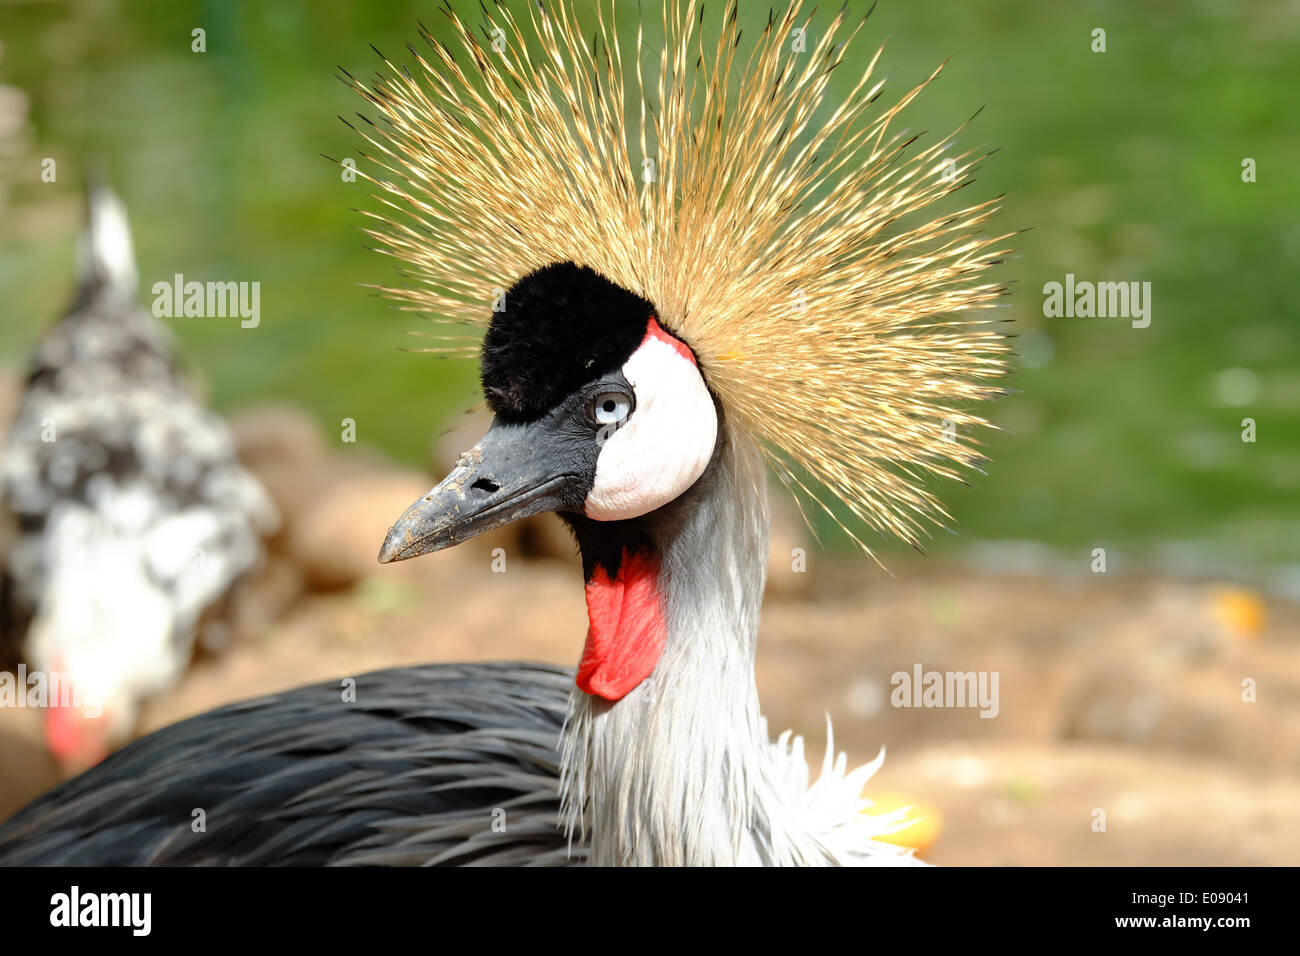 31 Stunning Birds With CRAZY HAIR Photos  Fun Facts